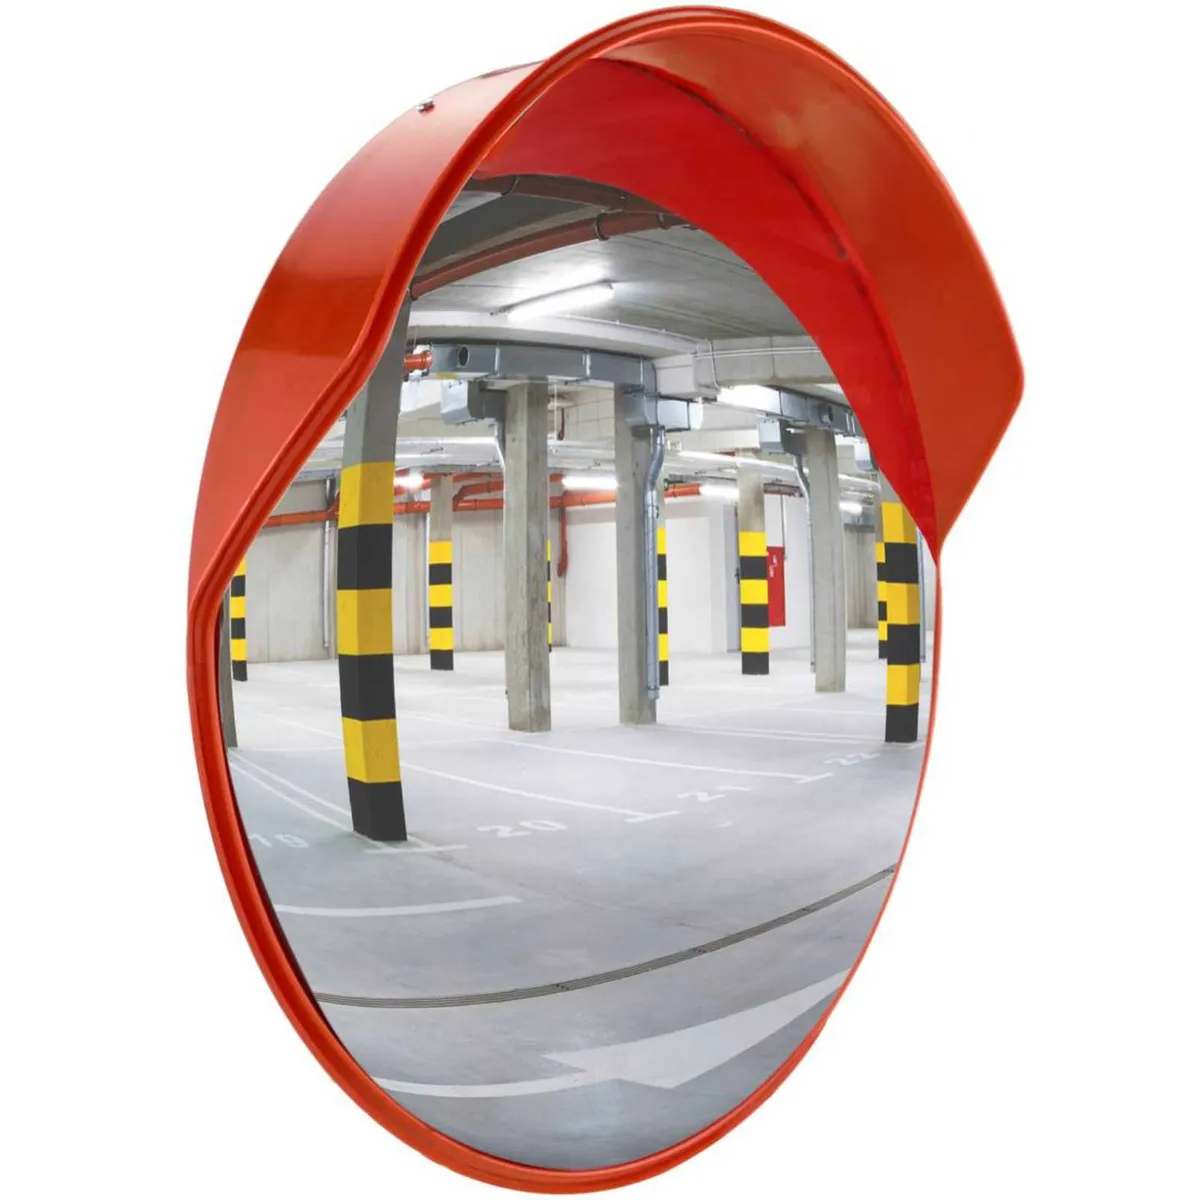 600mm Driveway Convex Safety Blind spot Mirror